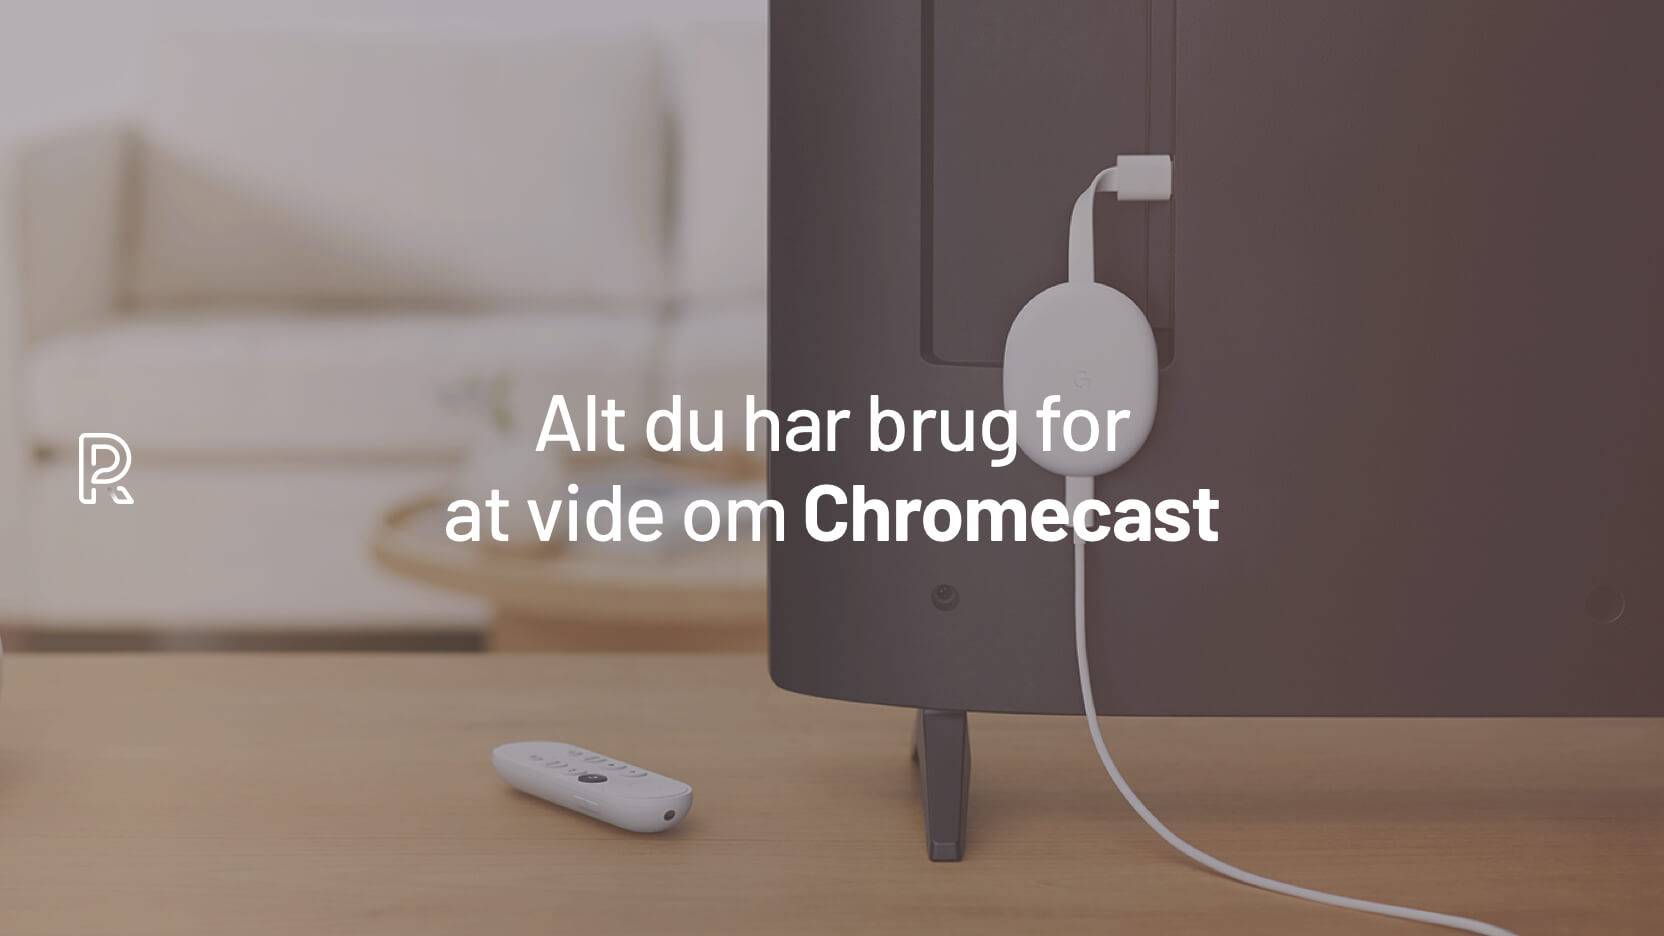 Alt du bør vide om Chromecast, også kendt som Google Chromecast